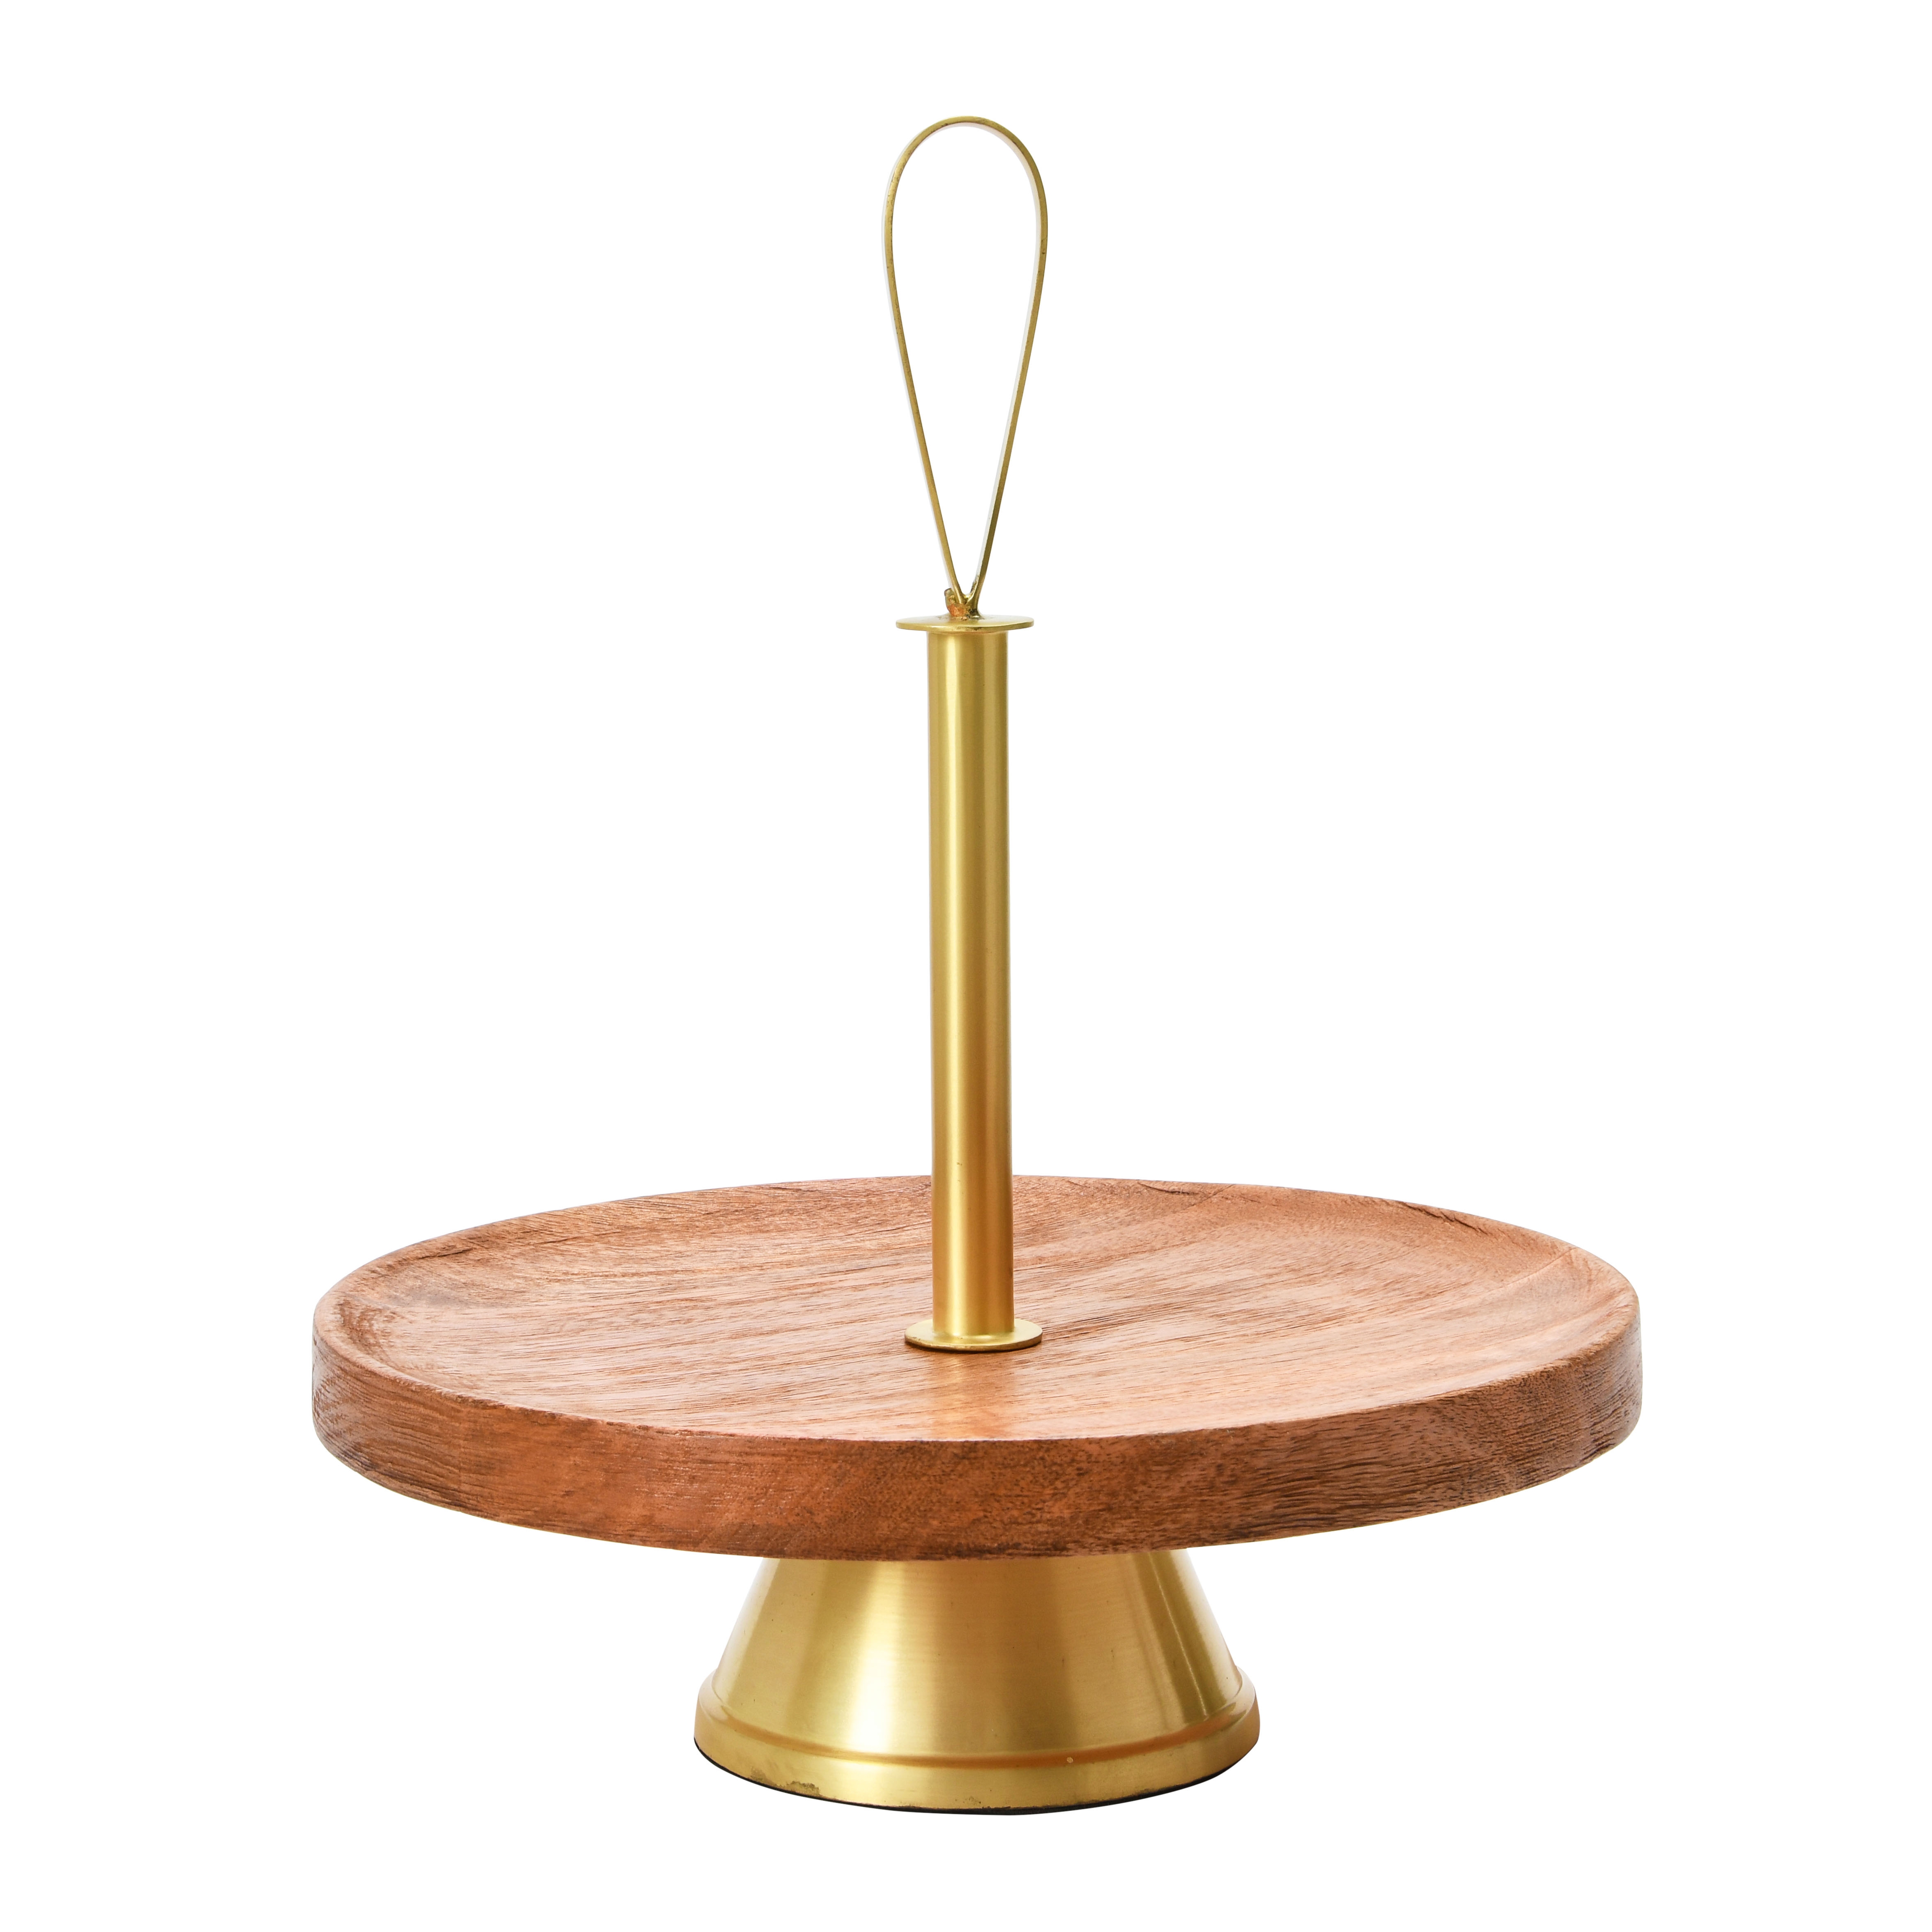 Elegant Modern Tray, Cake Stand or Desert Serve ware stand, Natural & Gold - Image 0